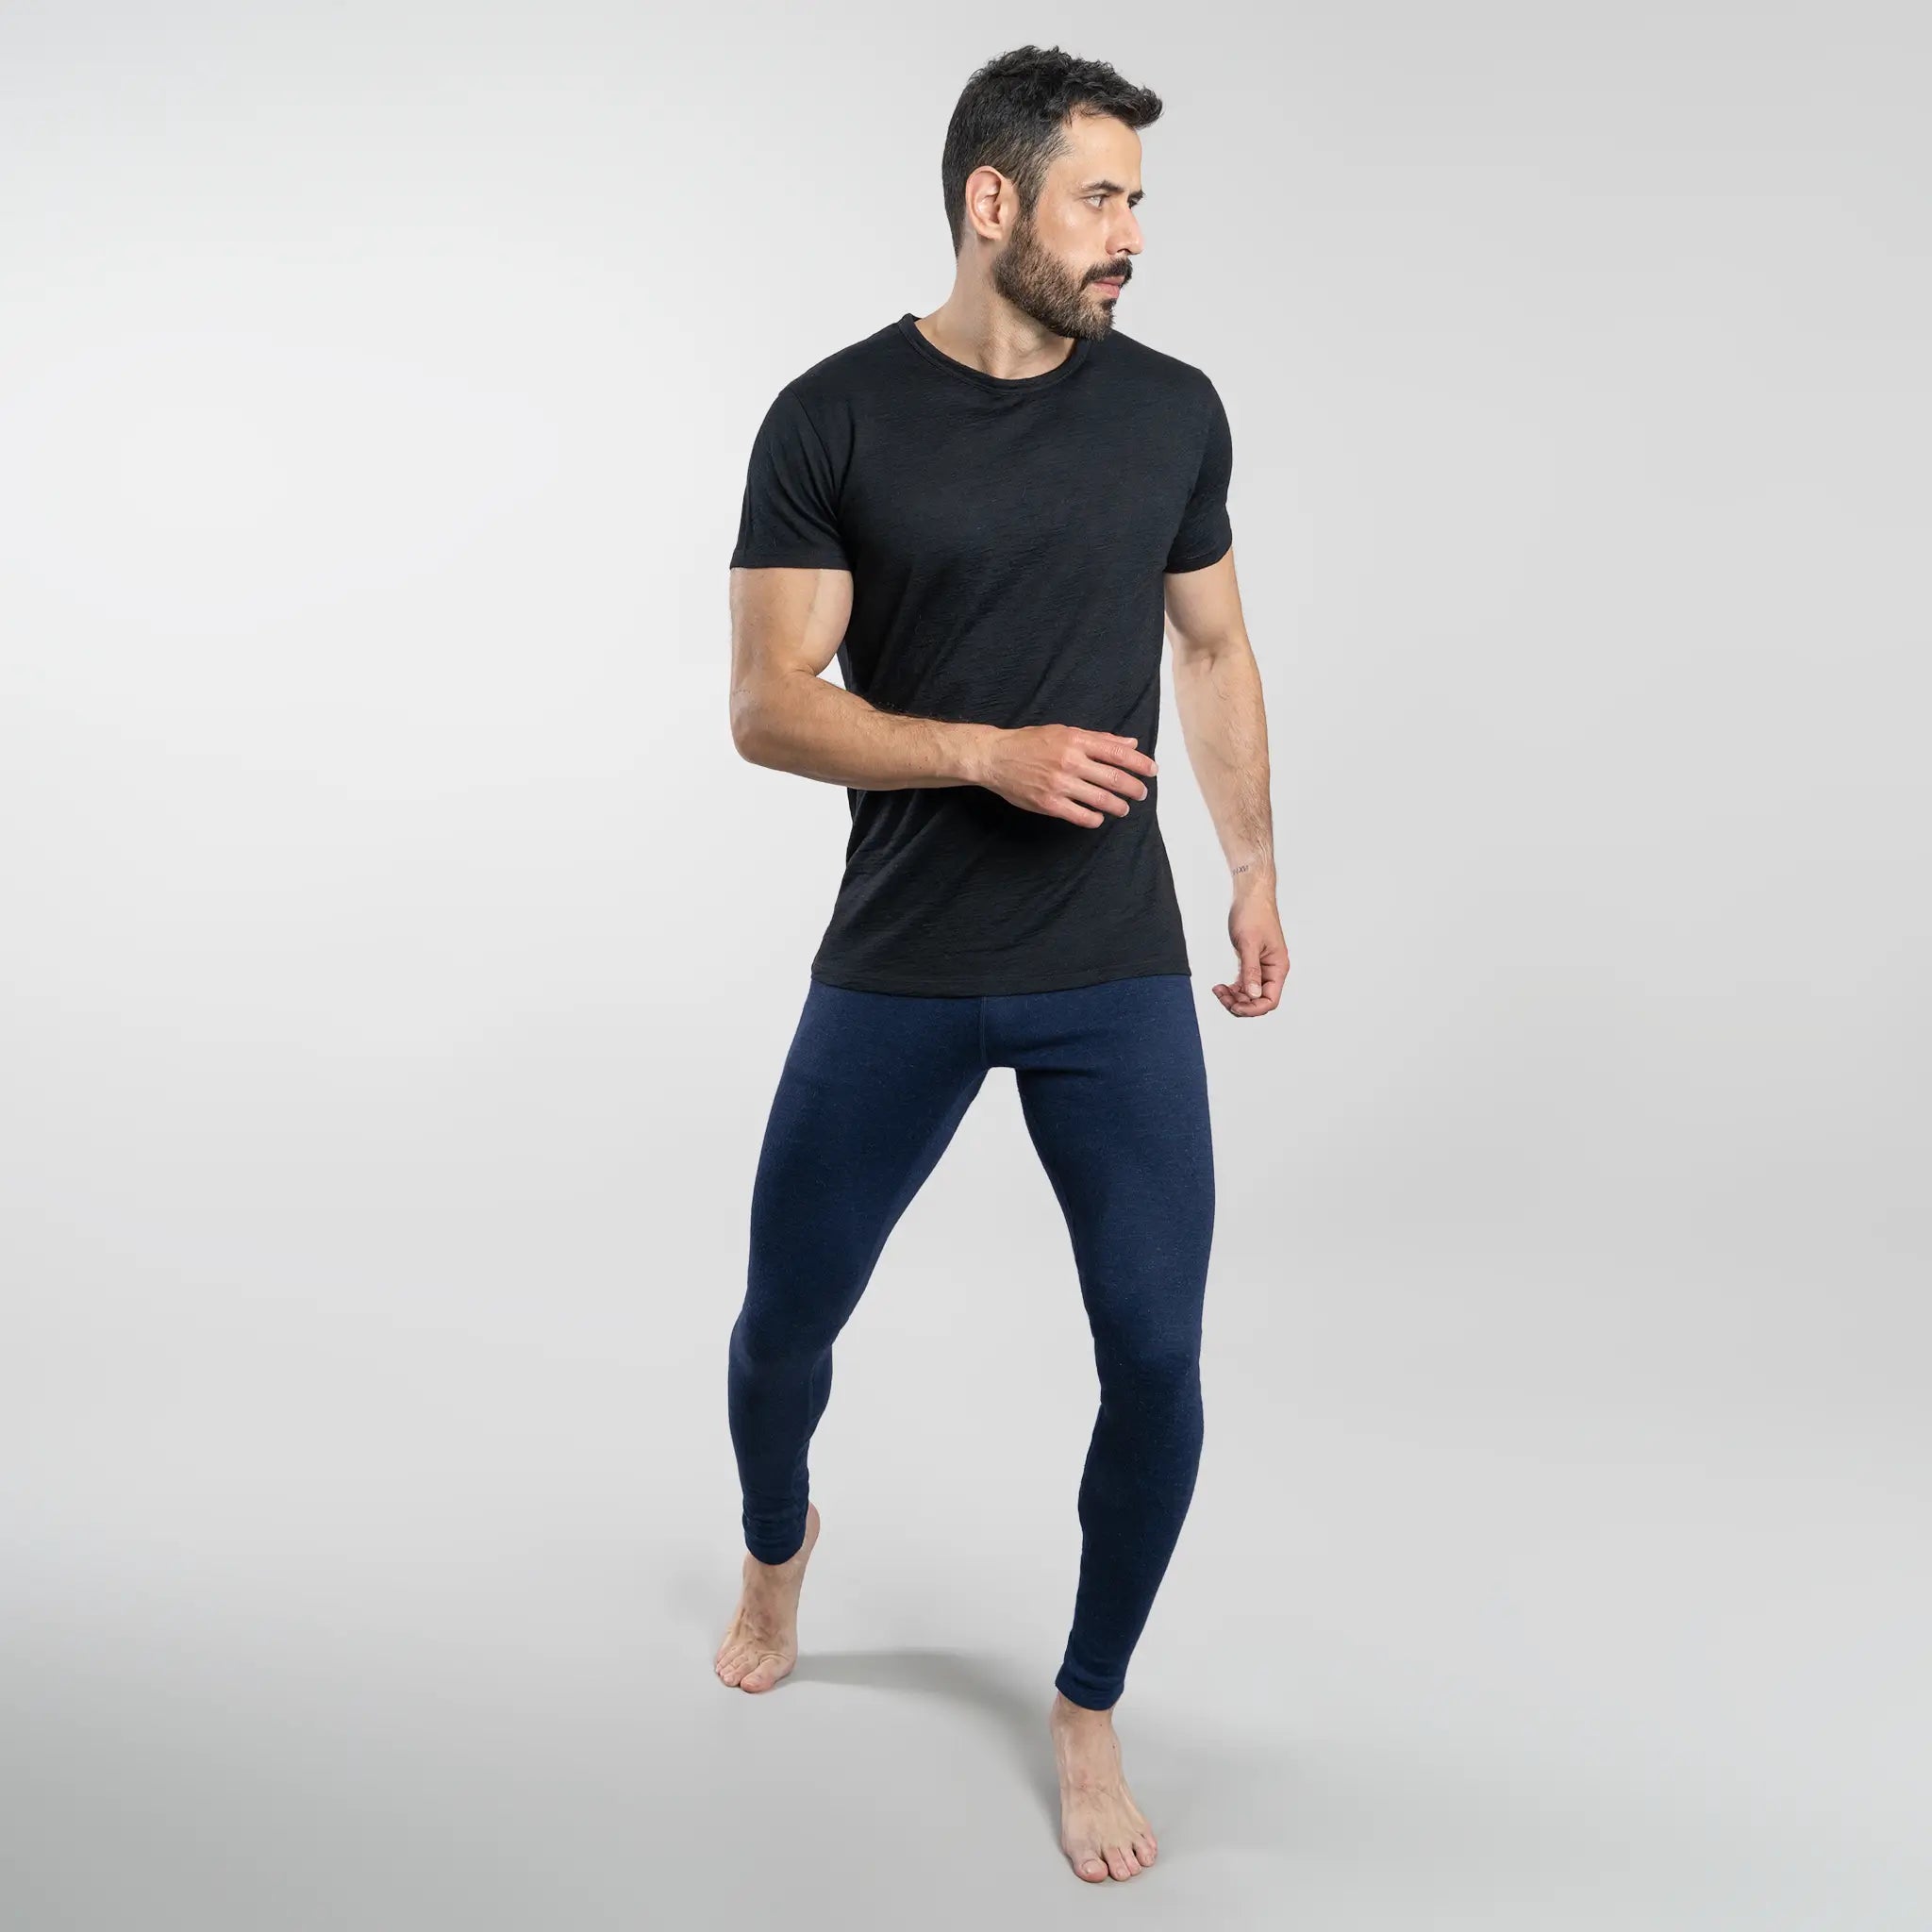 mens all purpose leggings lightweight color navy blue